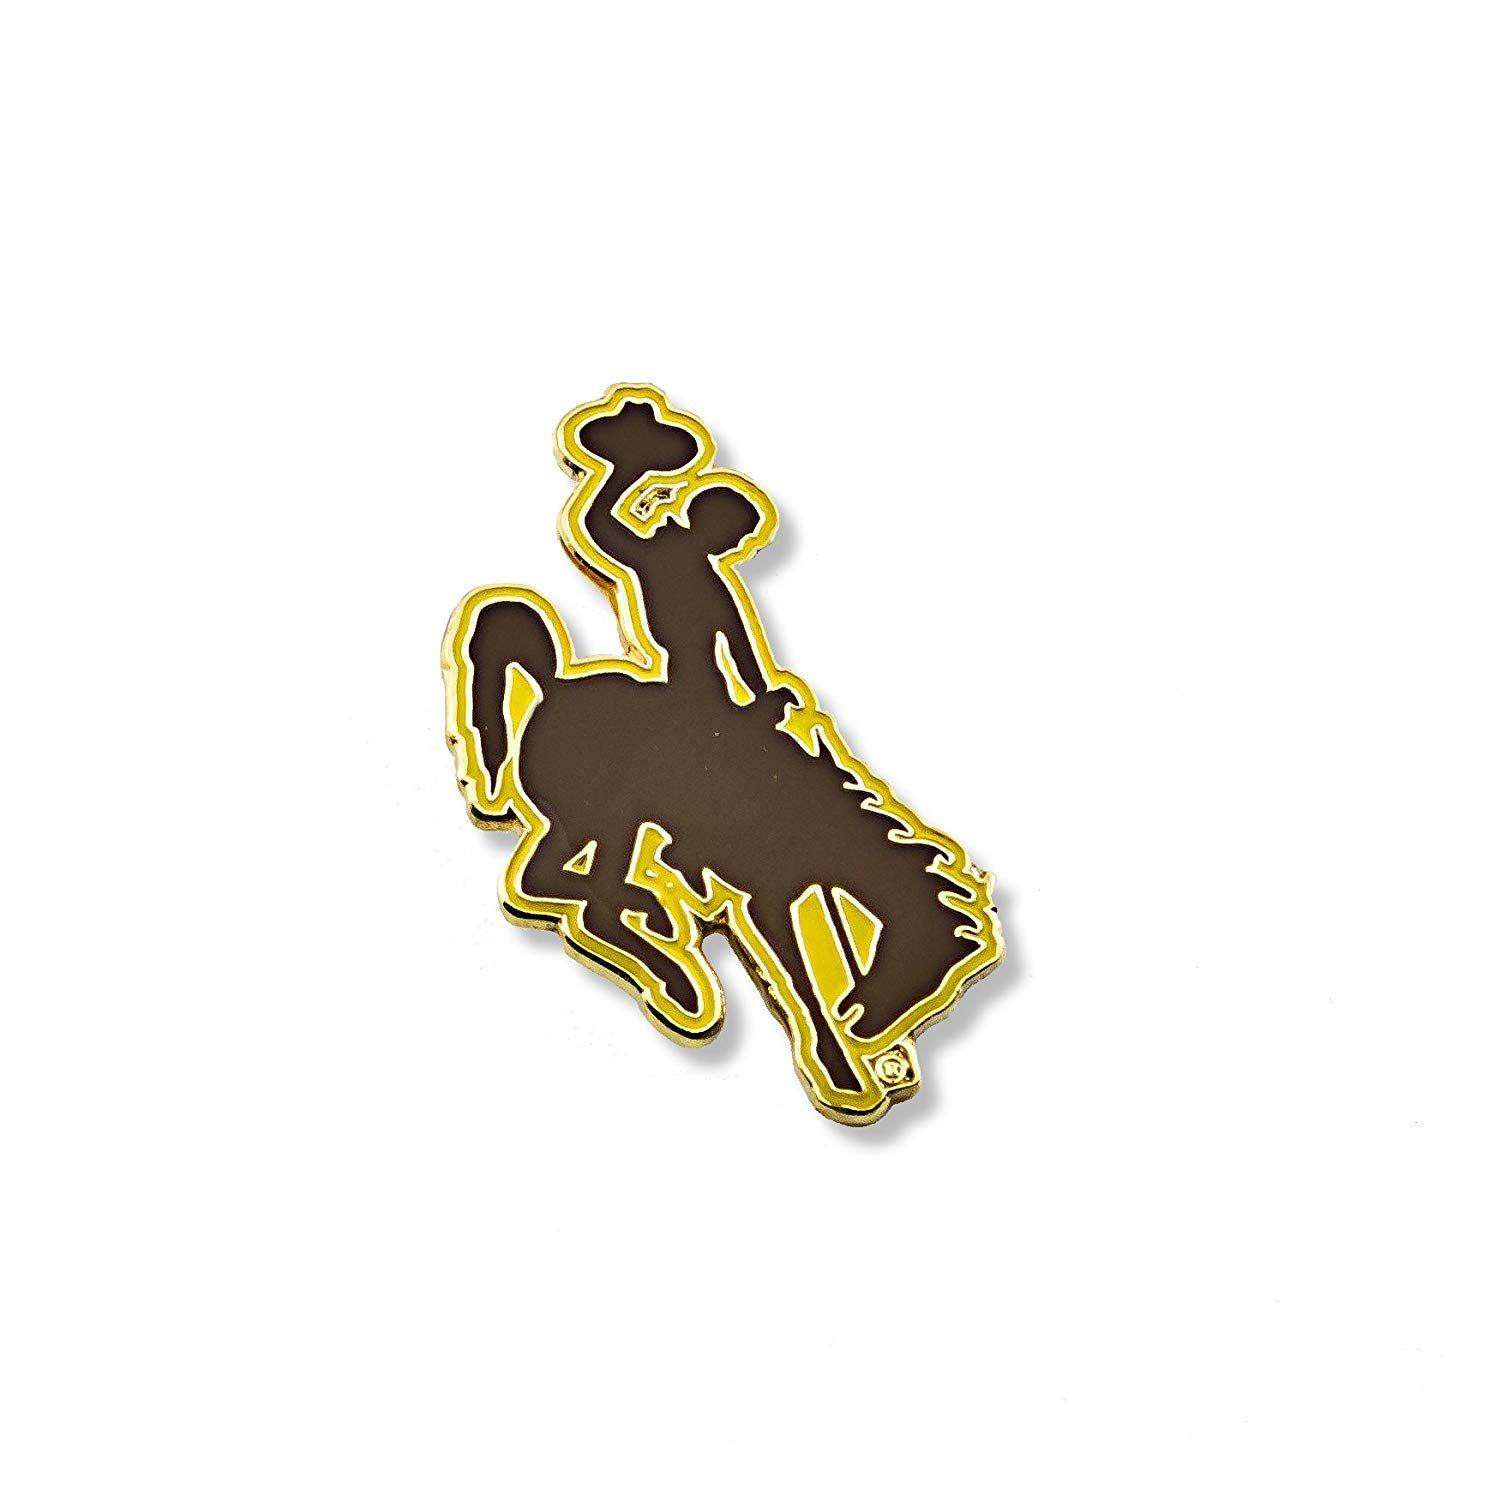 Wyoming Logo - Amazon.com : NCAA Wyoming Cowboys Logo Pin : Sports Related Pins